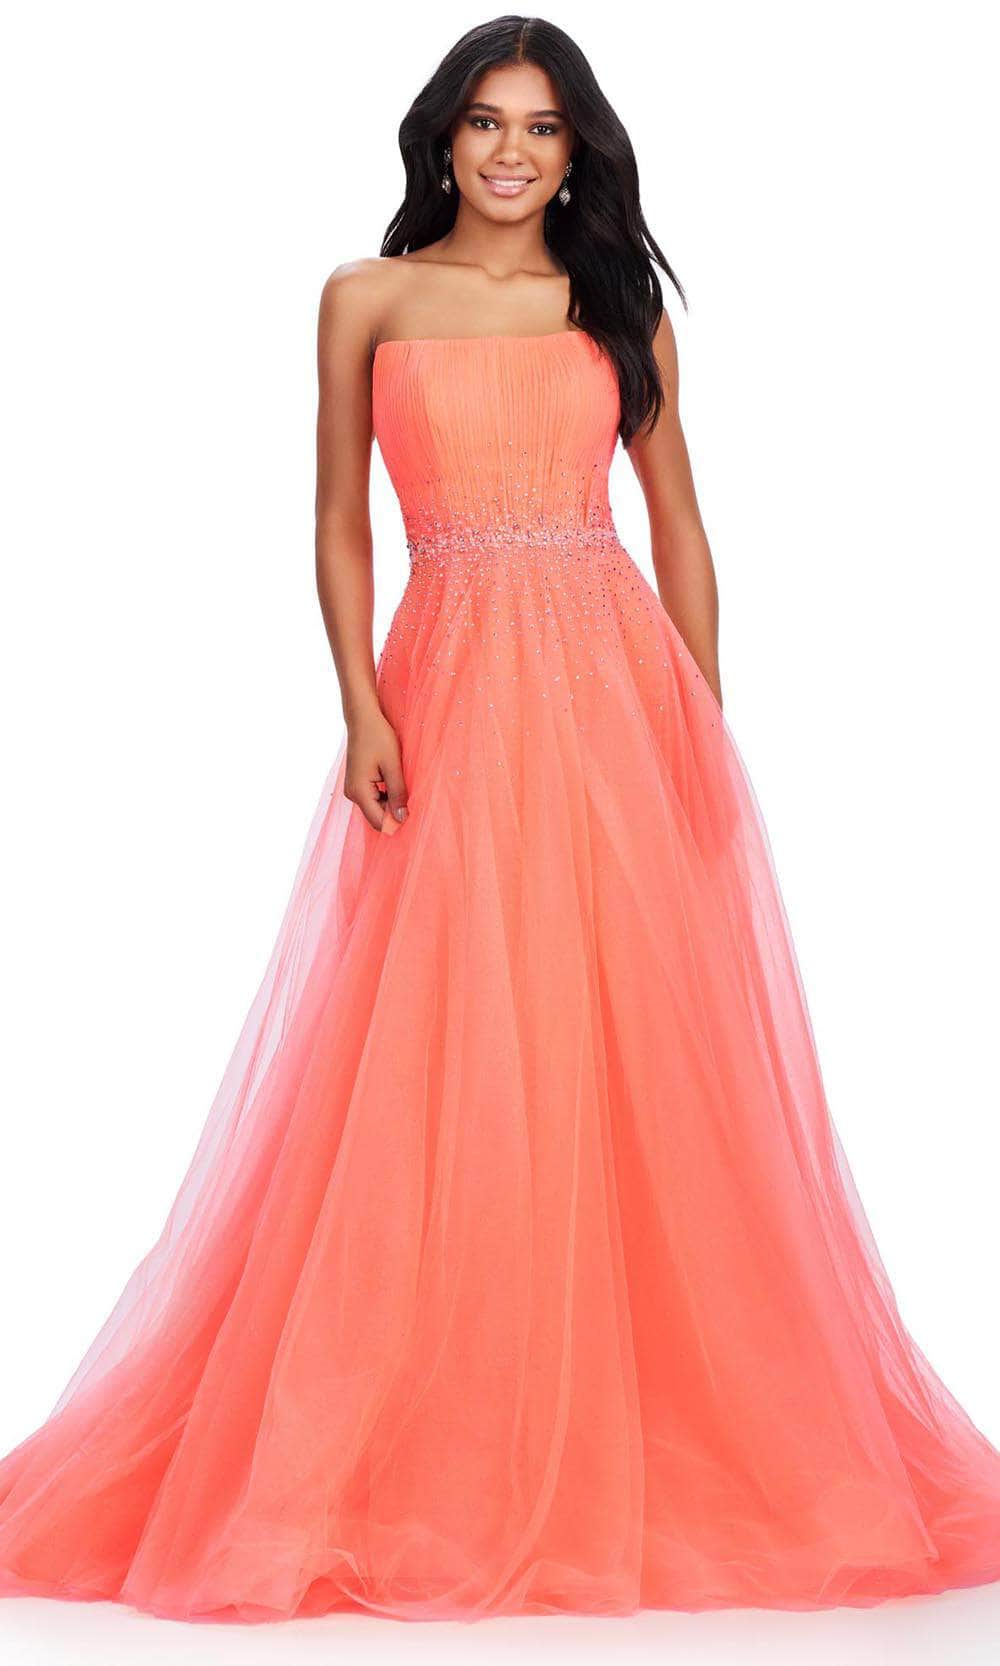 Image of Ashley Lauren 11597 - Strapless Glitter Tulle Prom Gown